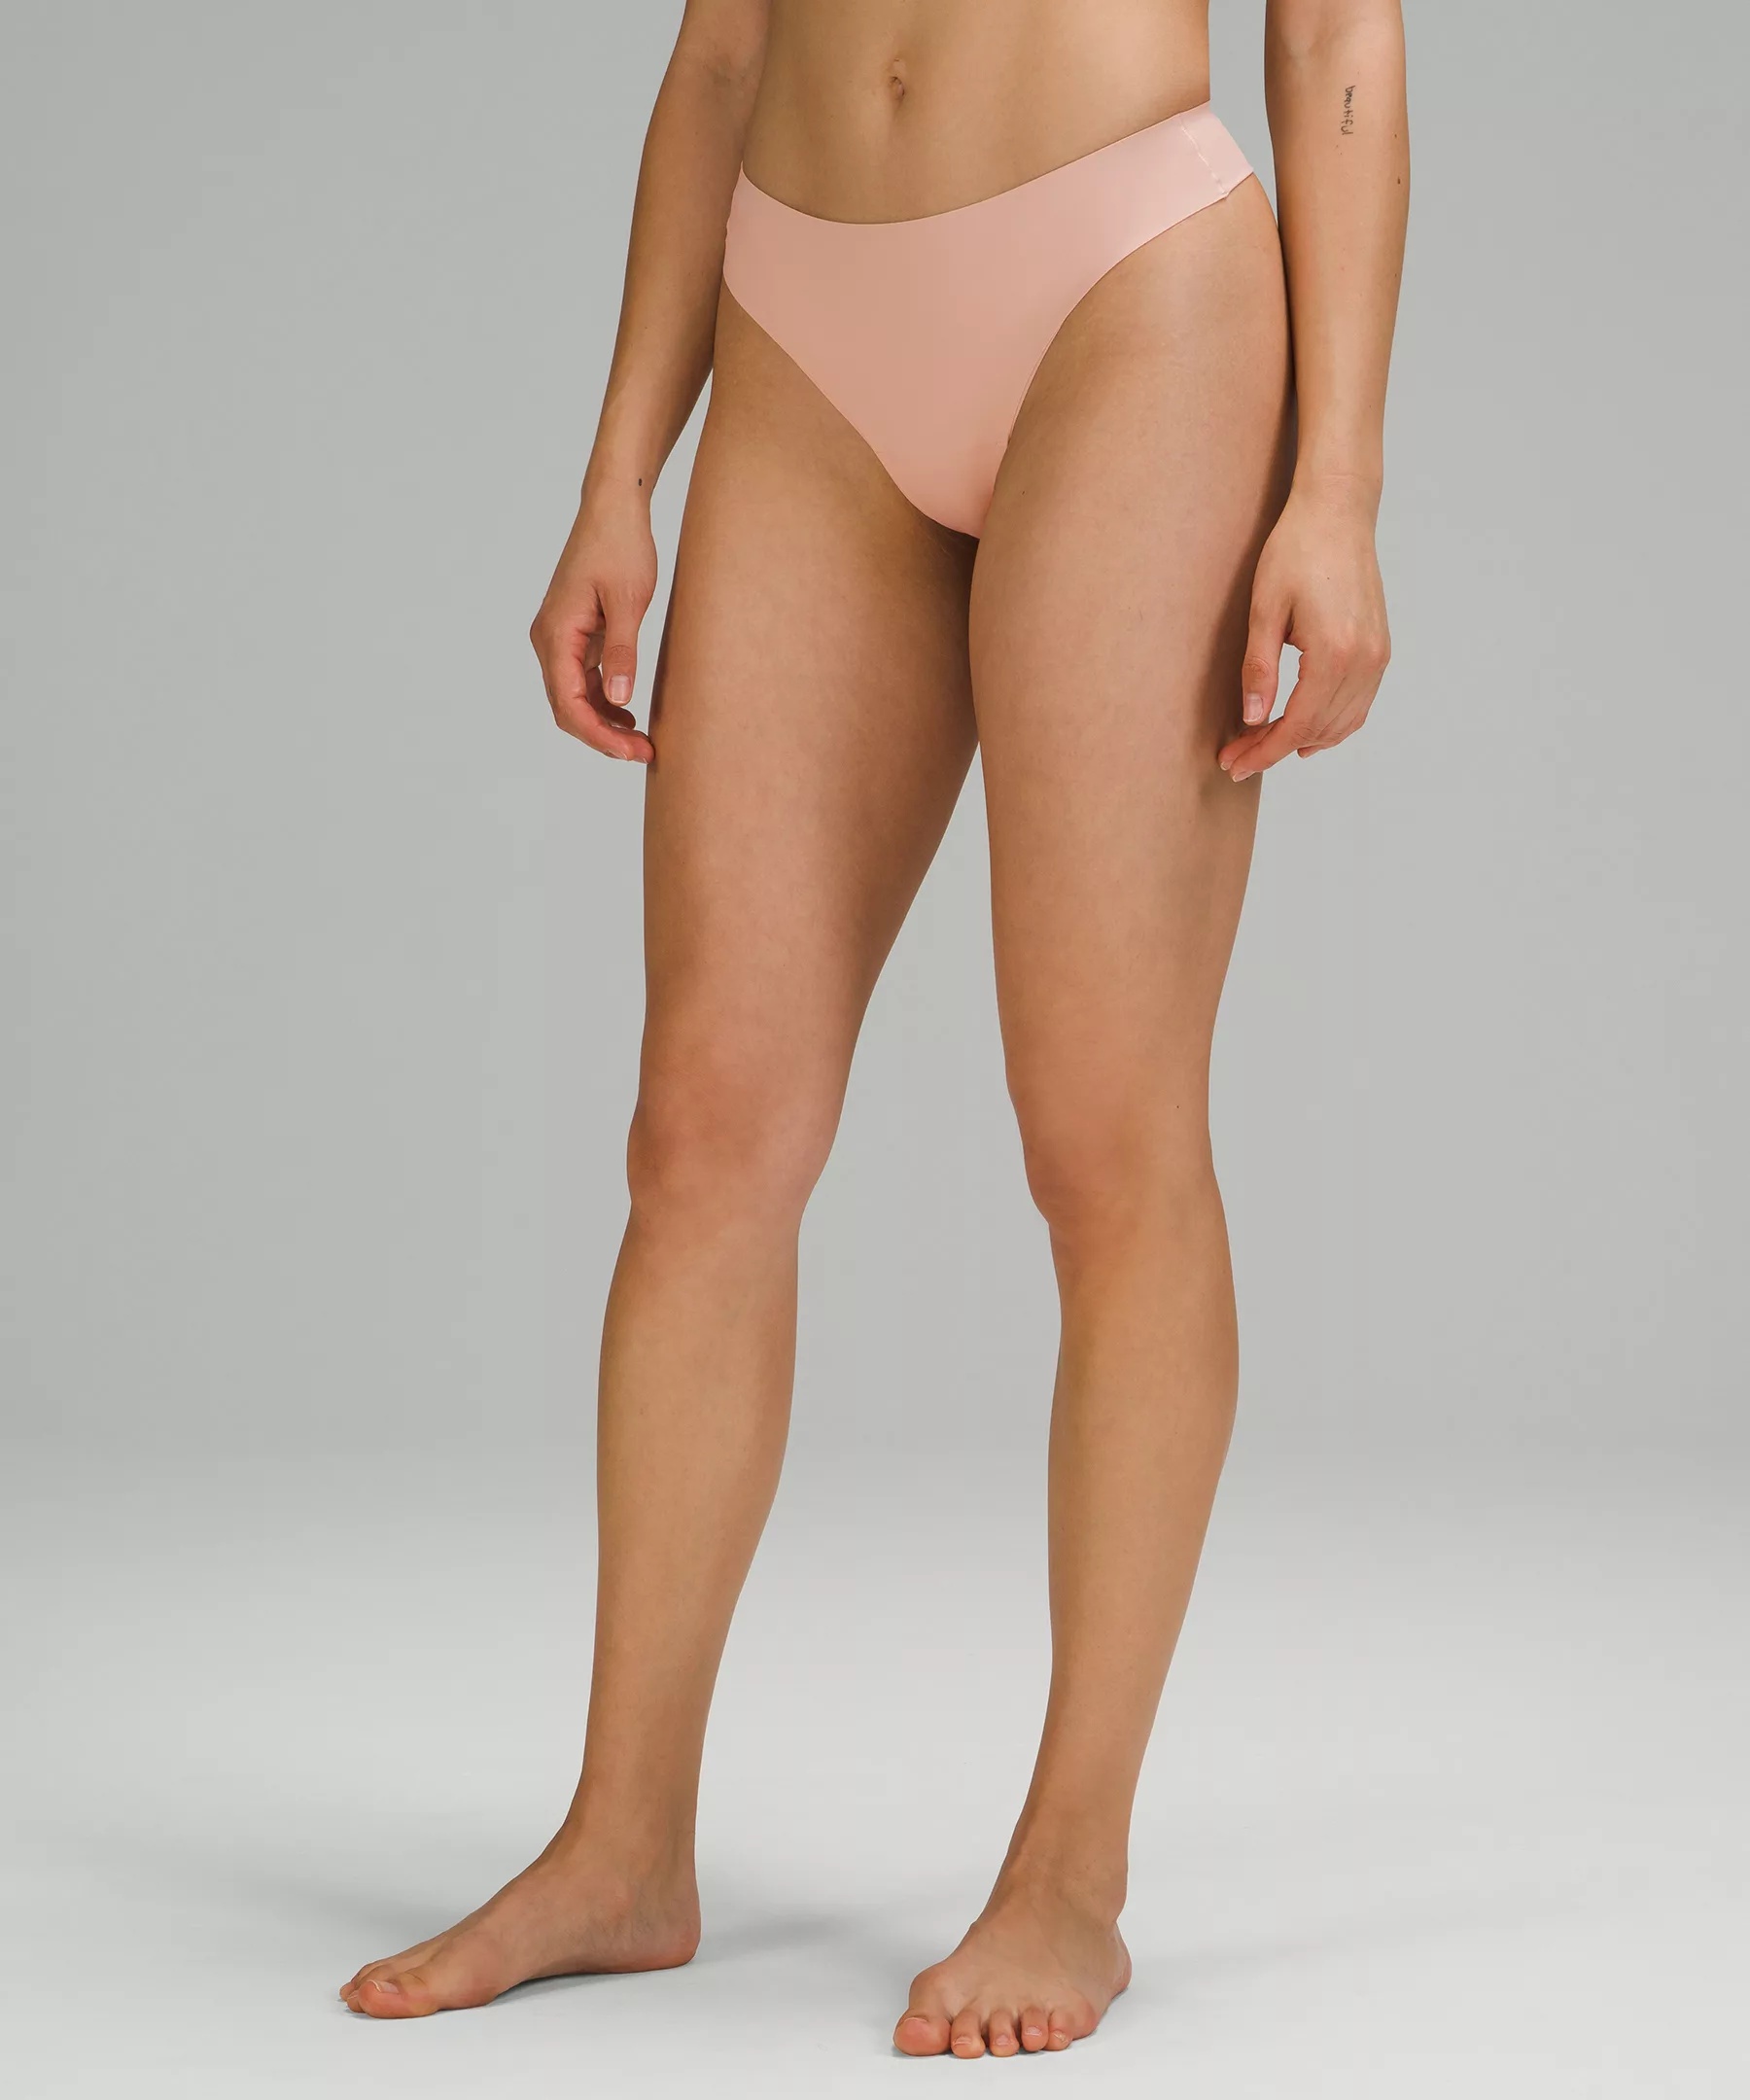 InvisiWear Mid-Rise Thong Underwear - 1